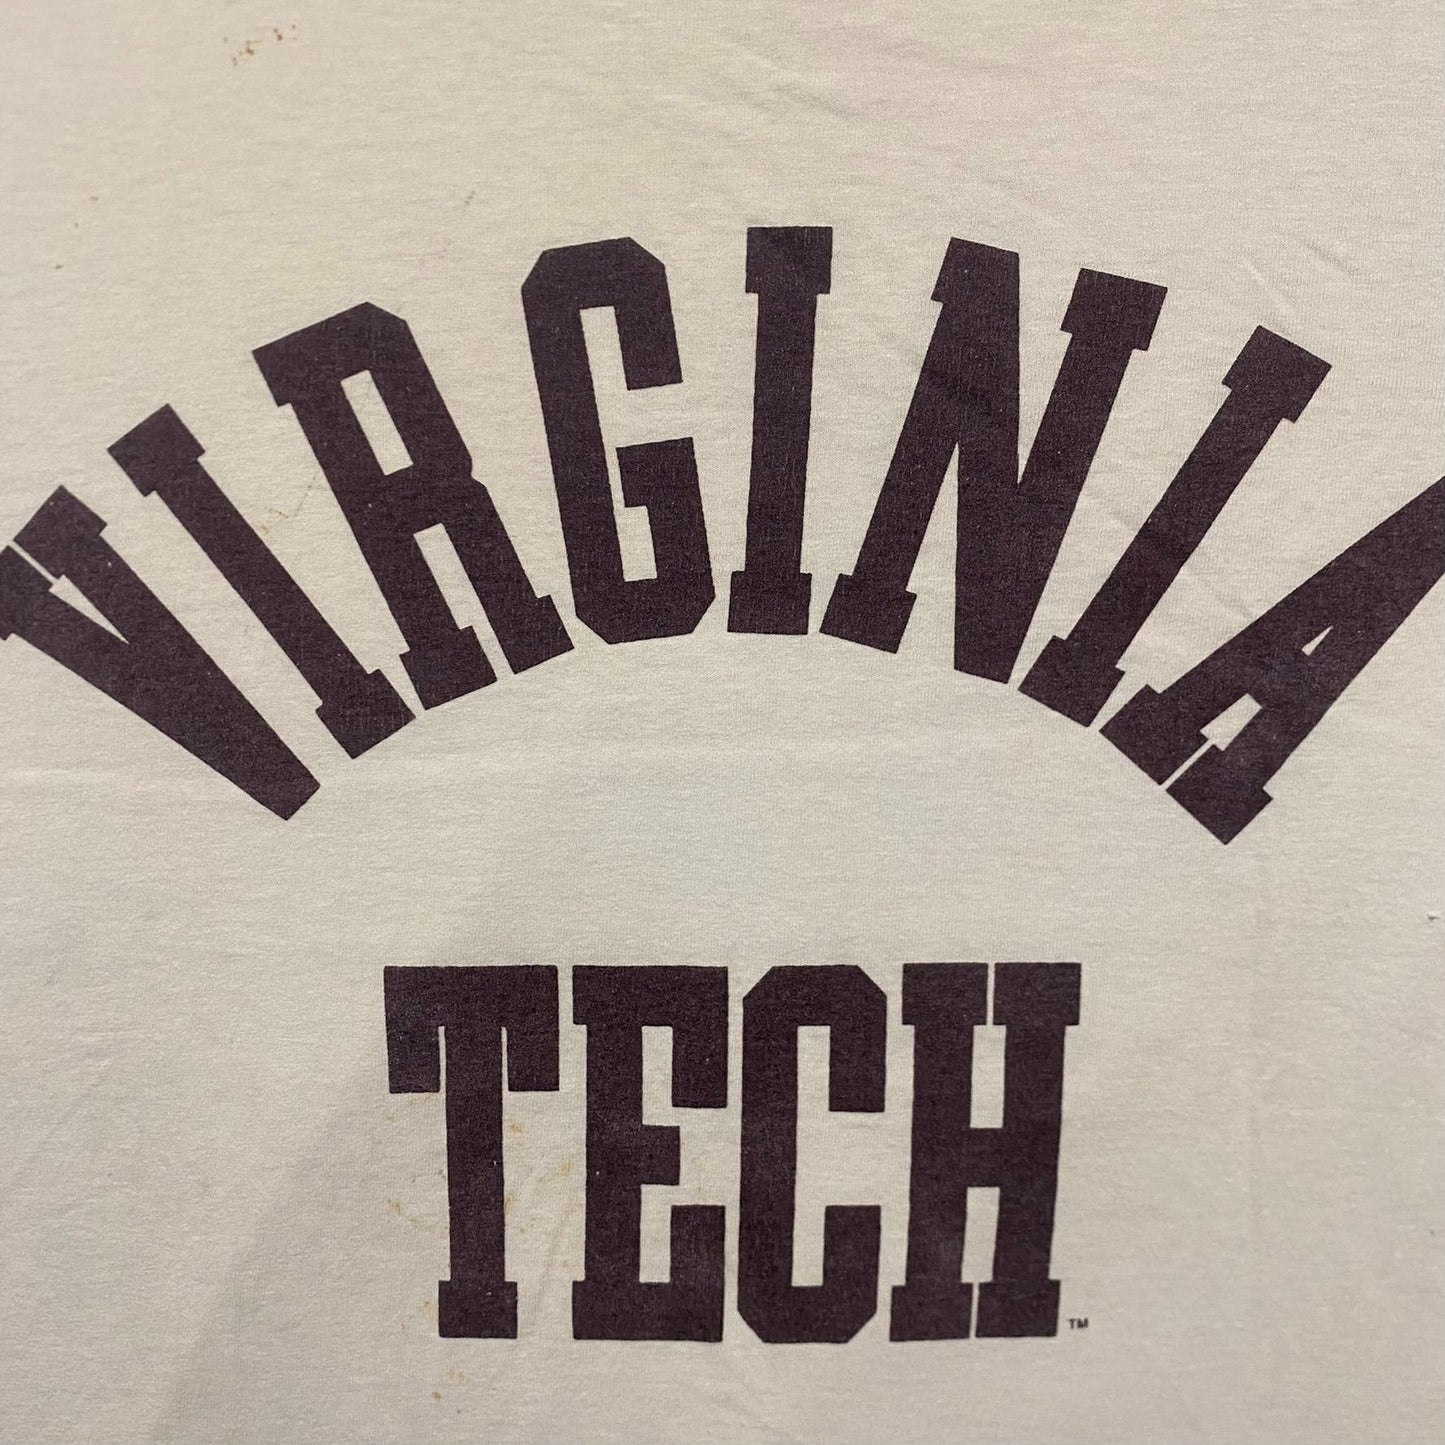 Vintage 90s Virginia Tech Single Stitch College Sports Tee